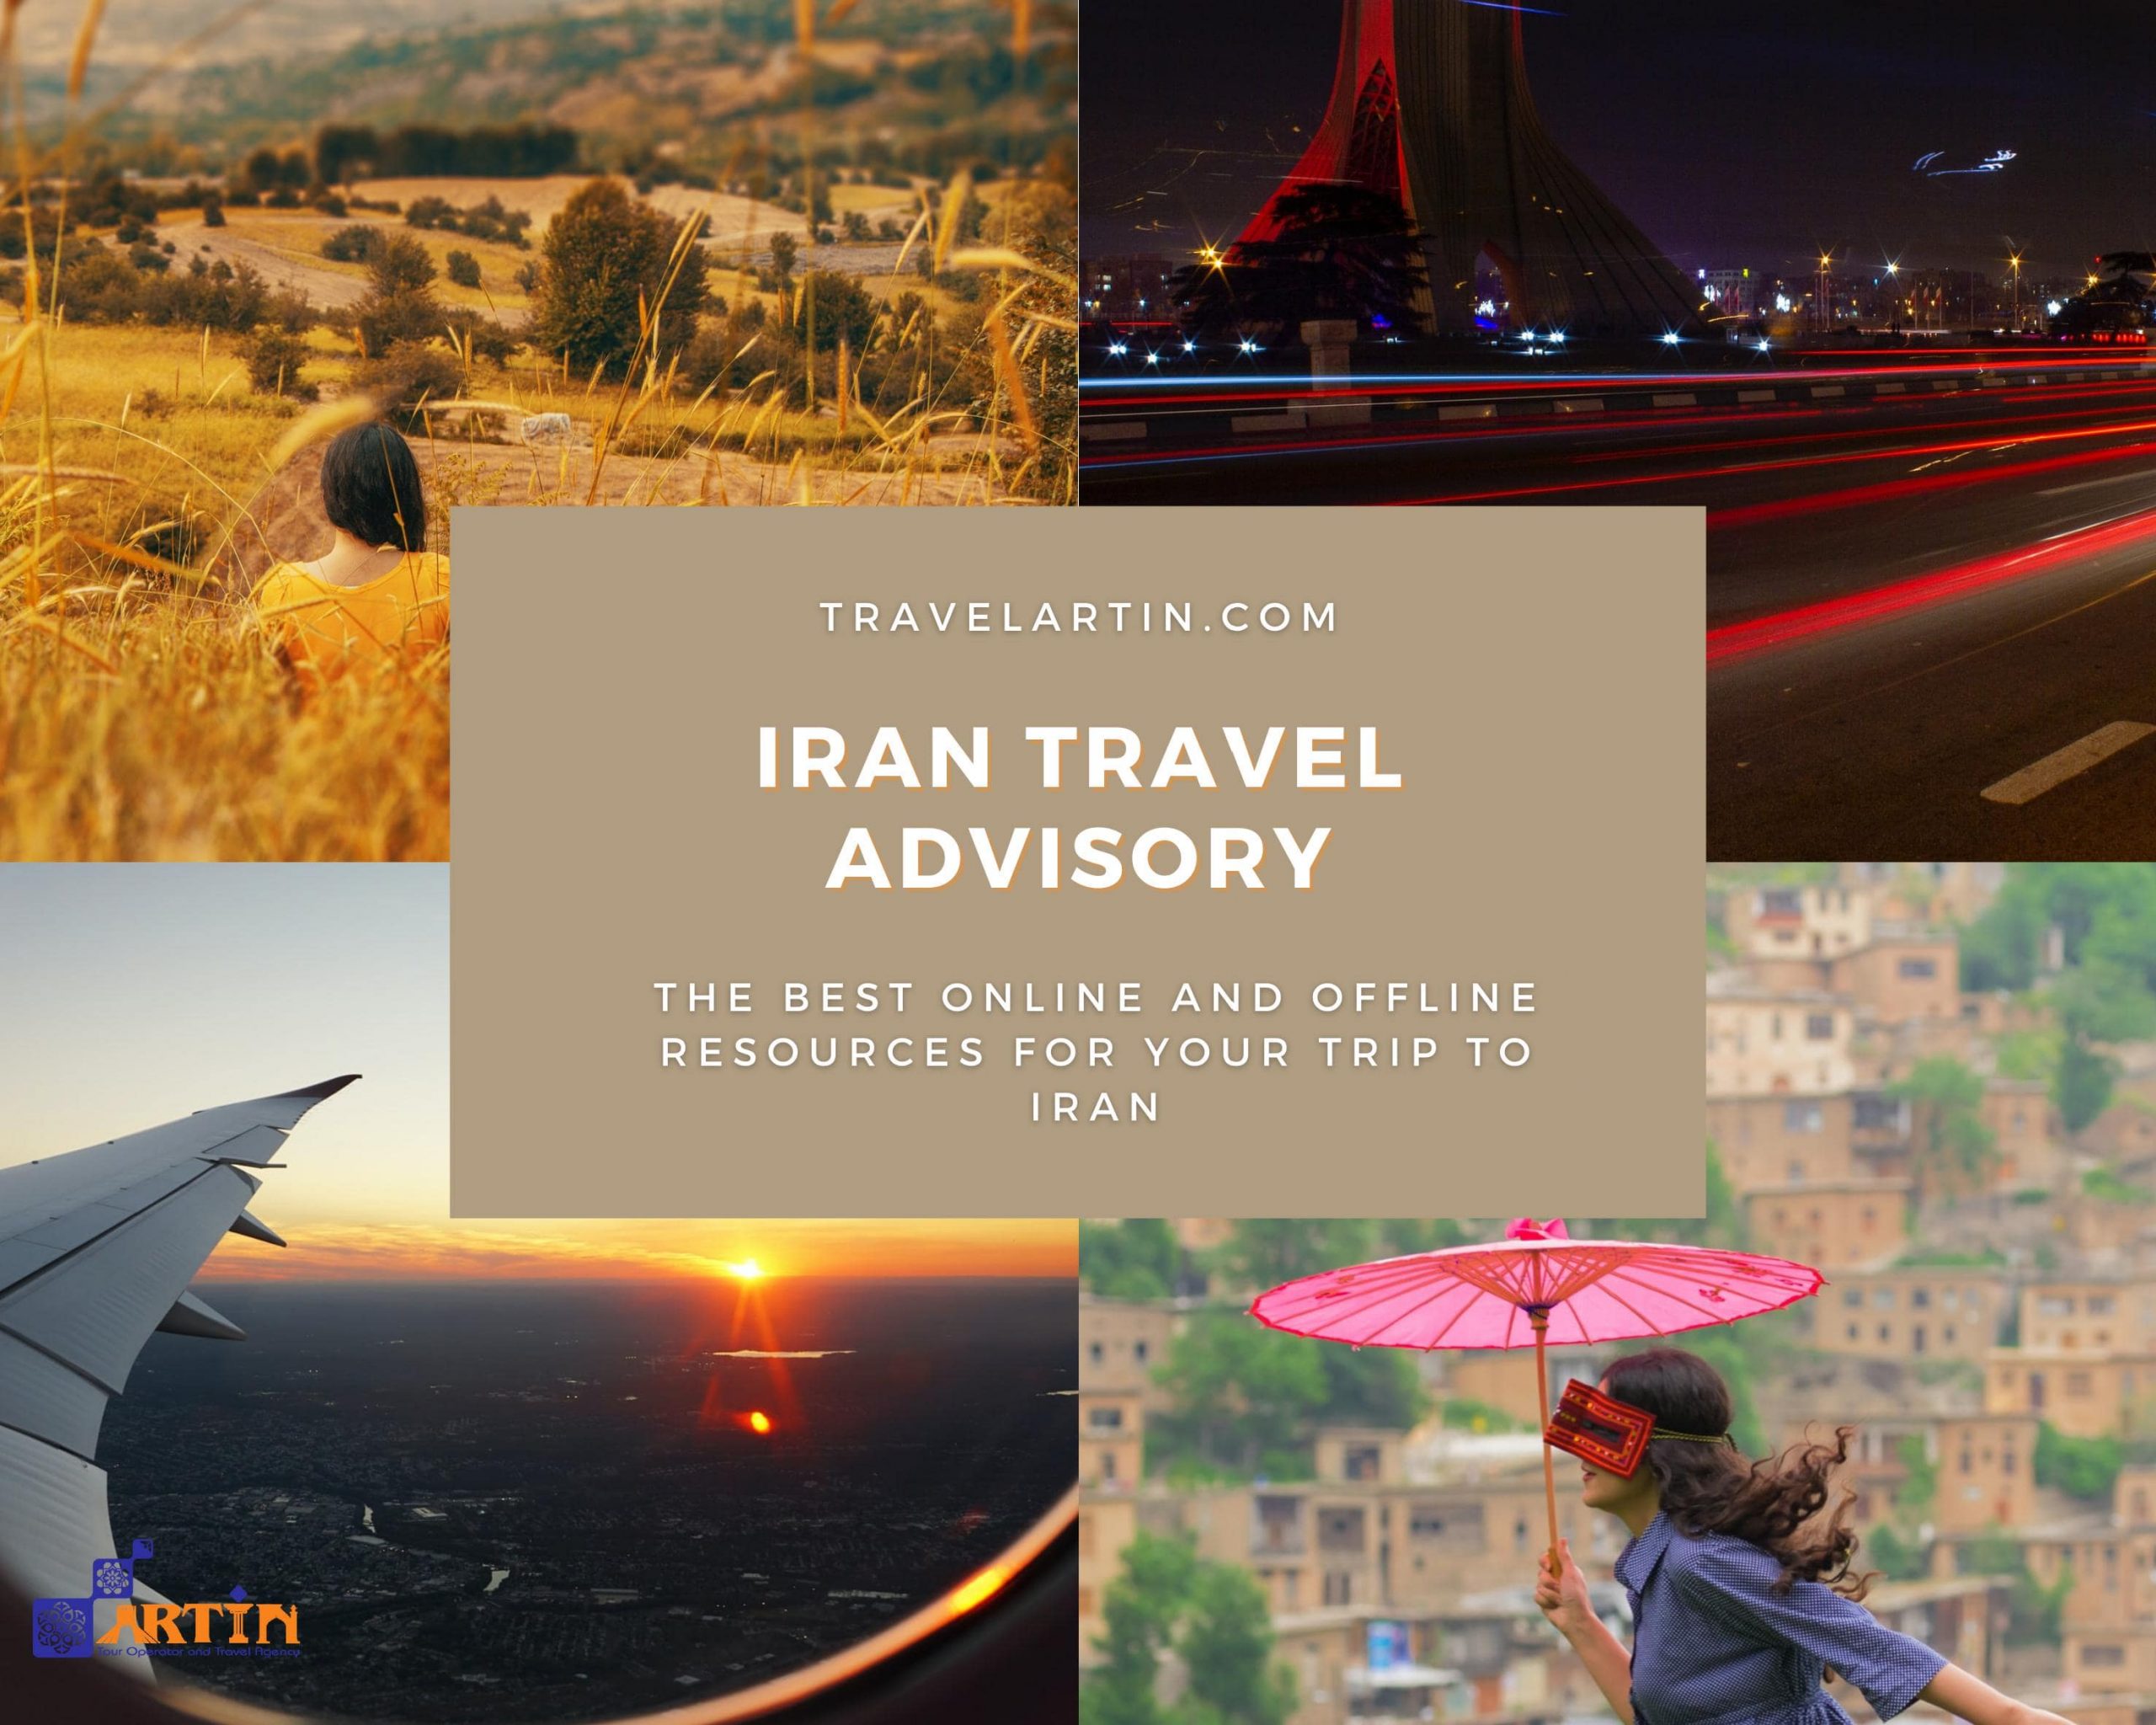 11Iran travel advisory - travelartin